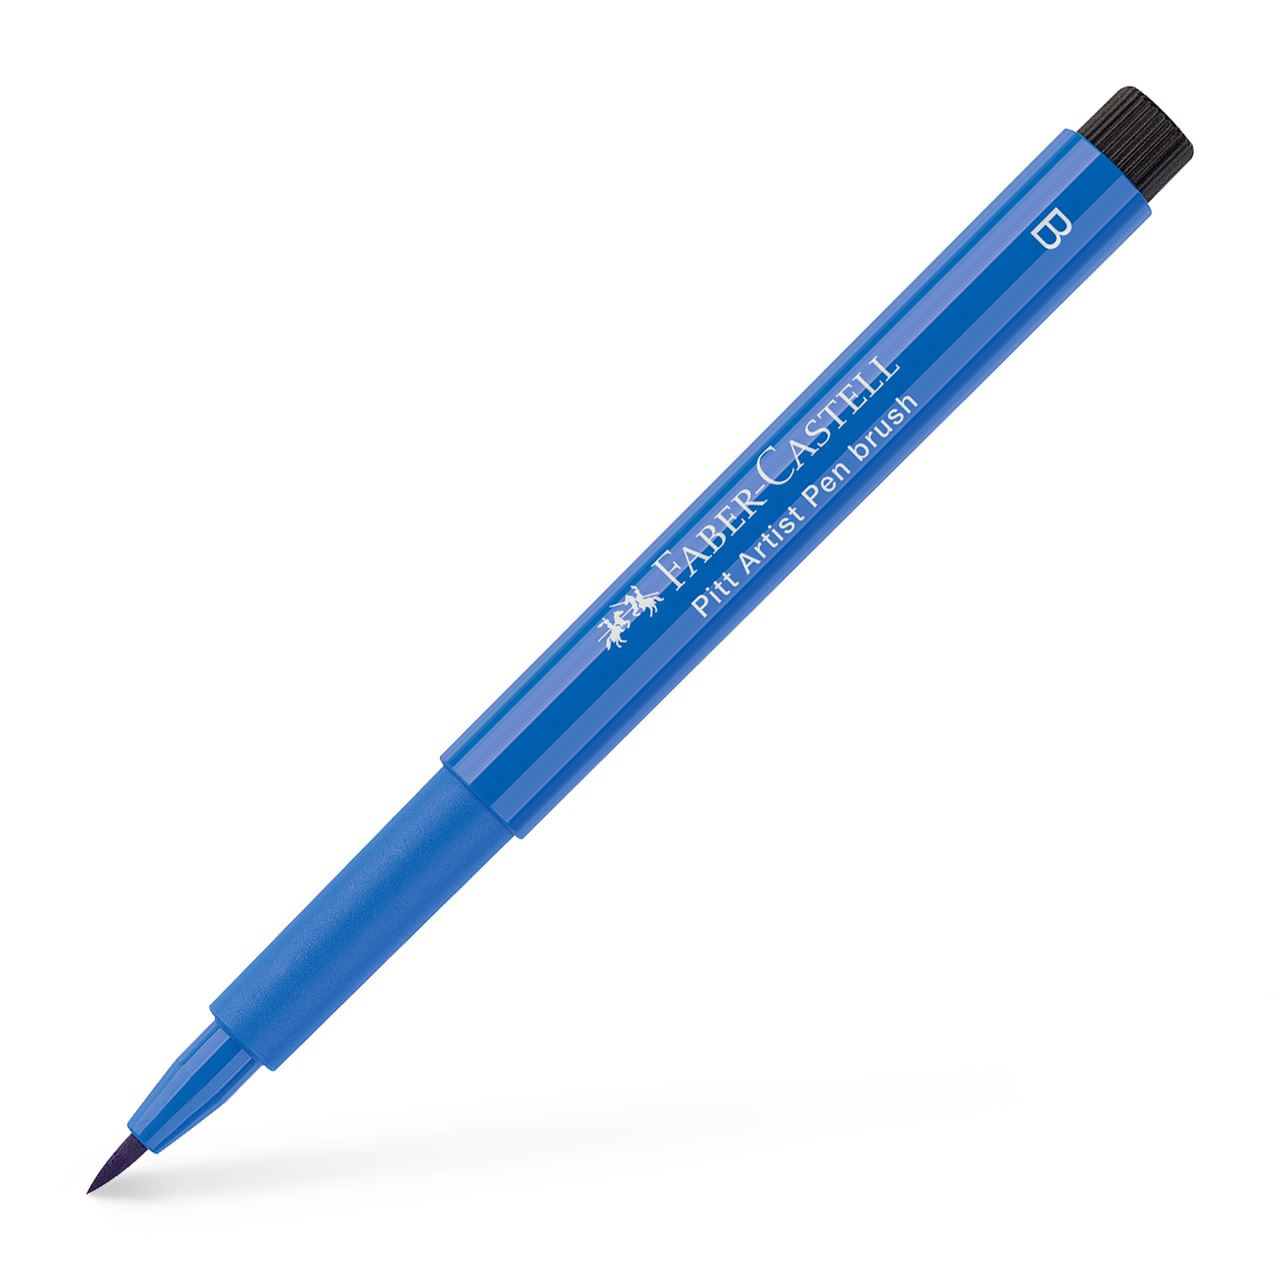 Faber-Castell - Pitt Artist Pen Brush India ink pen, cobalt blue